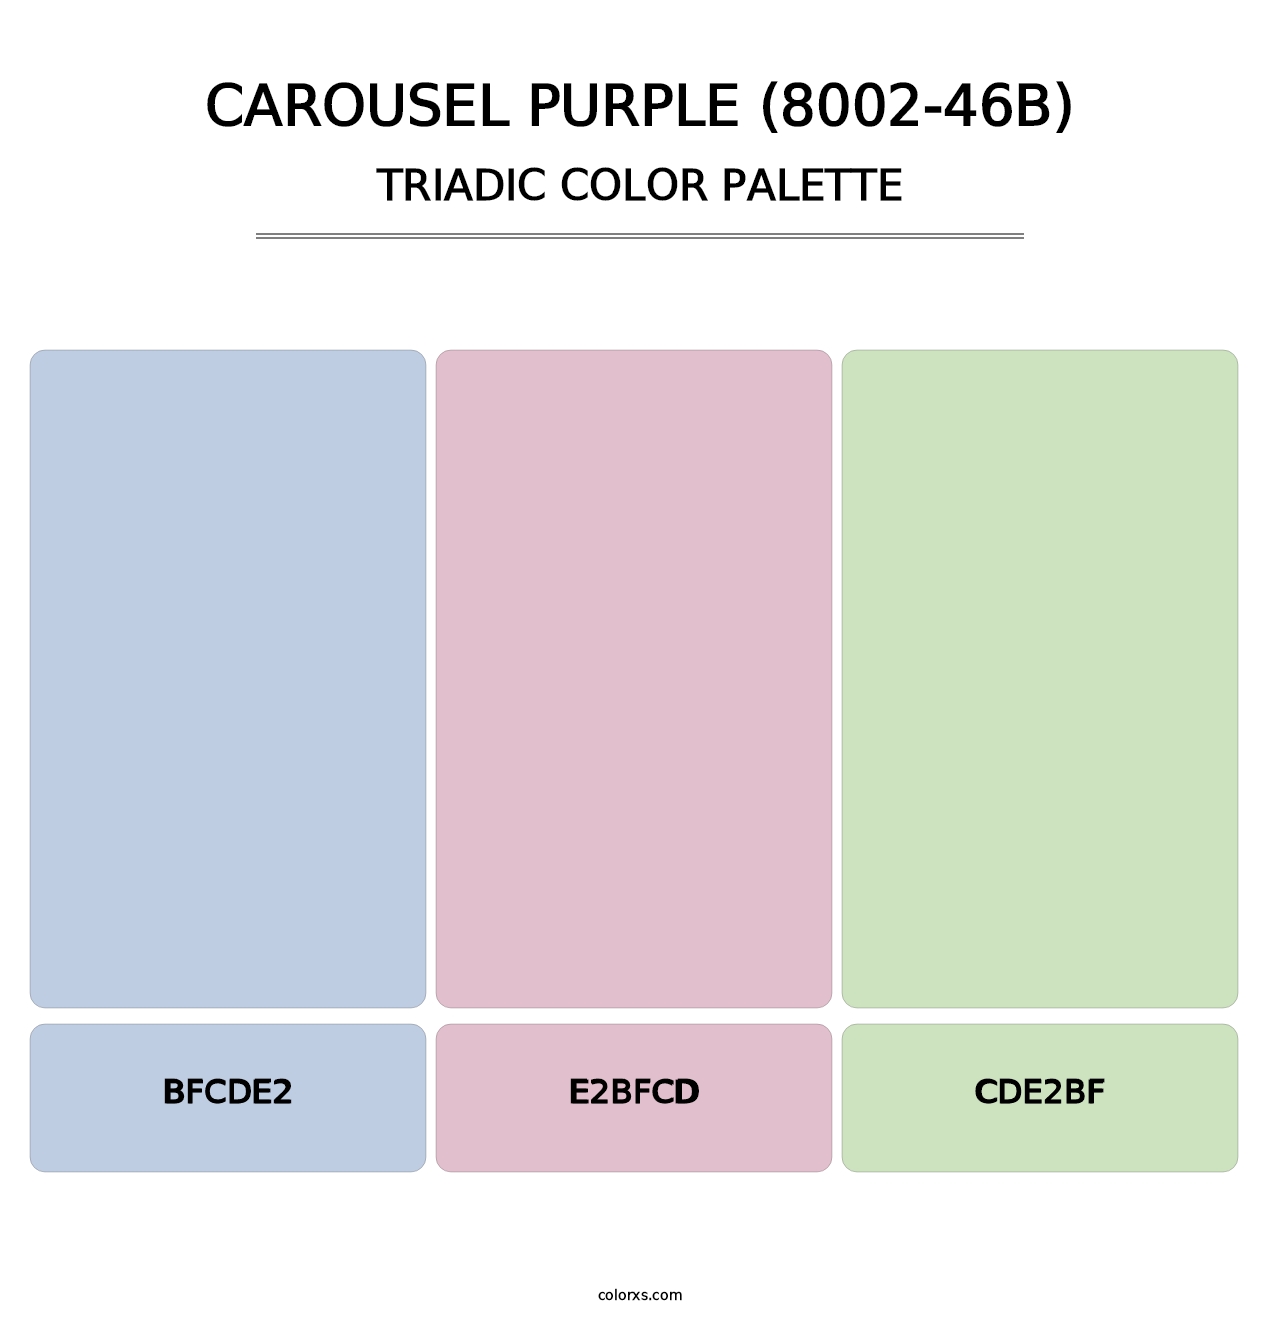 Carousel Purple (8002-46B) - Triadic Color Palette